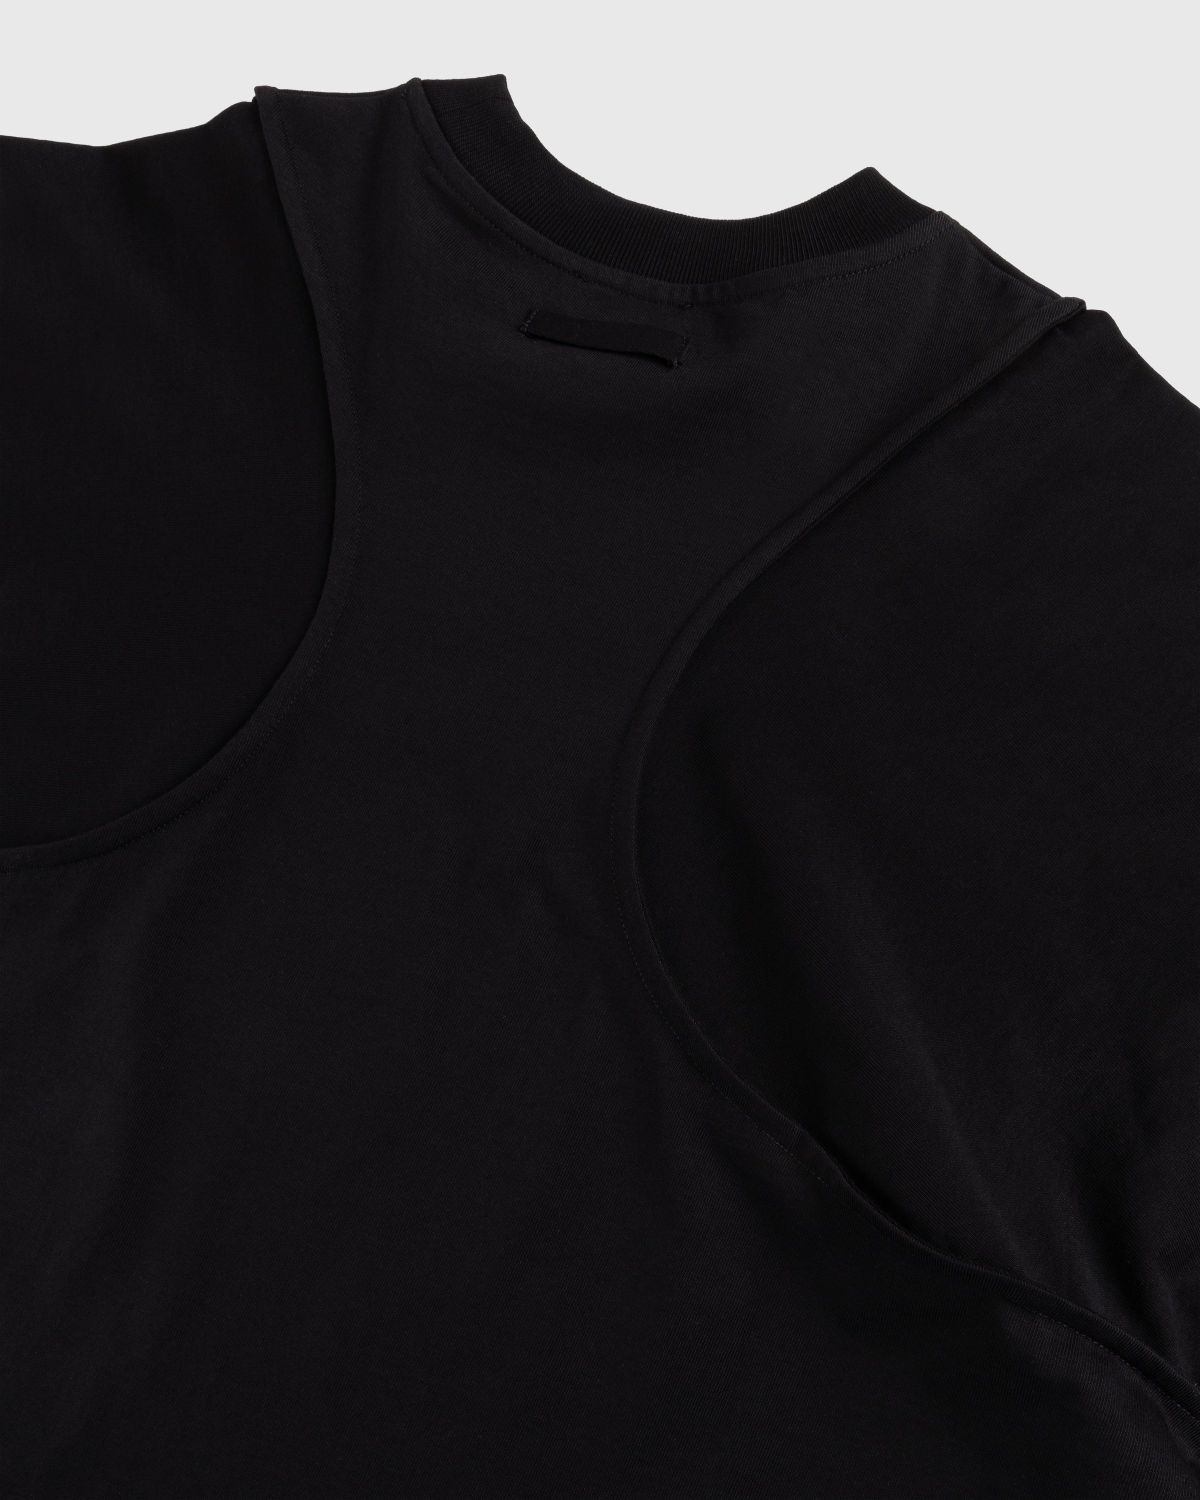 Jean Paul Gaultier – JPG T-Shirt Black - 4